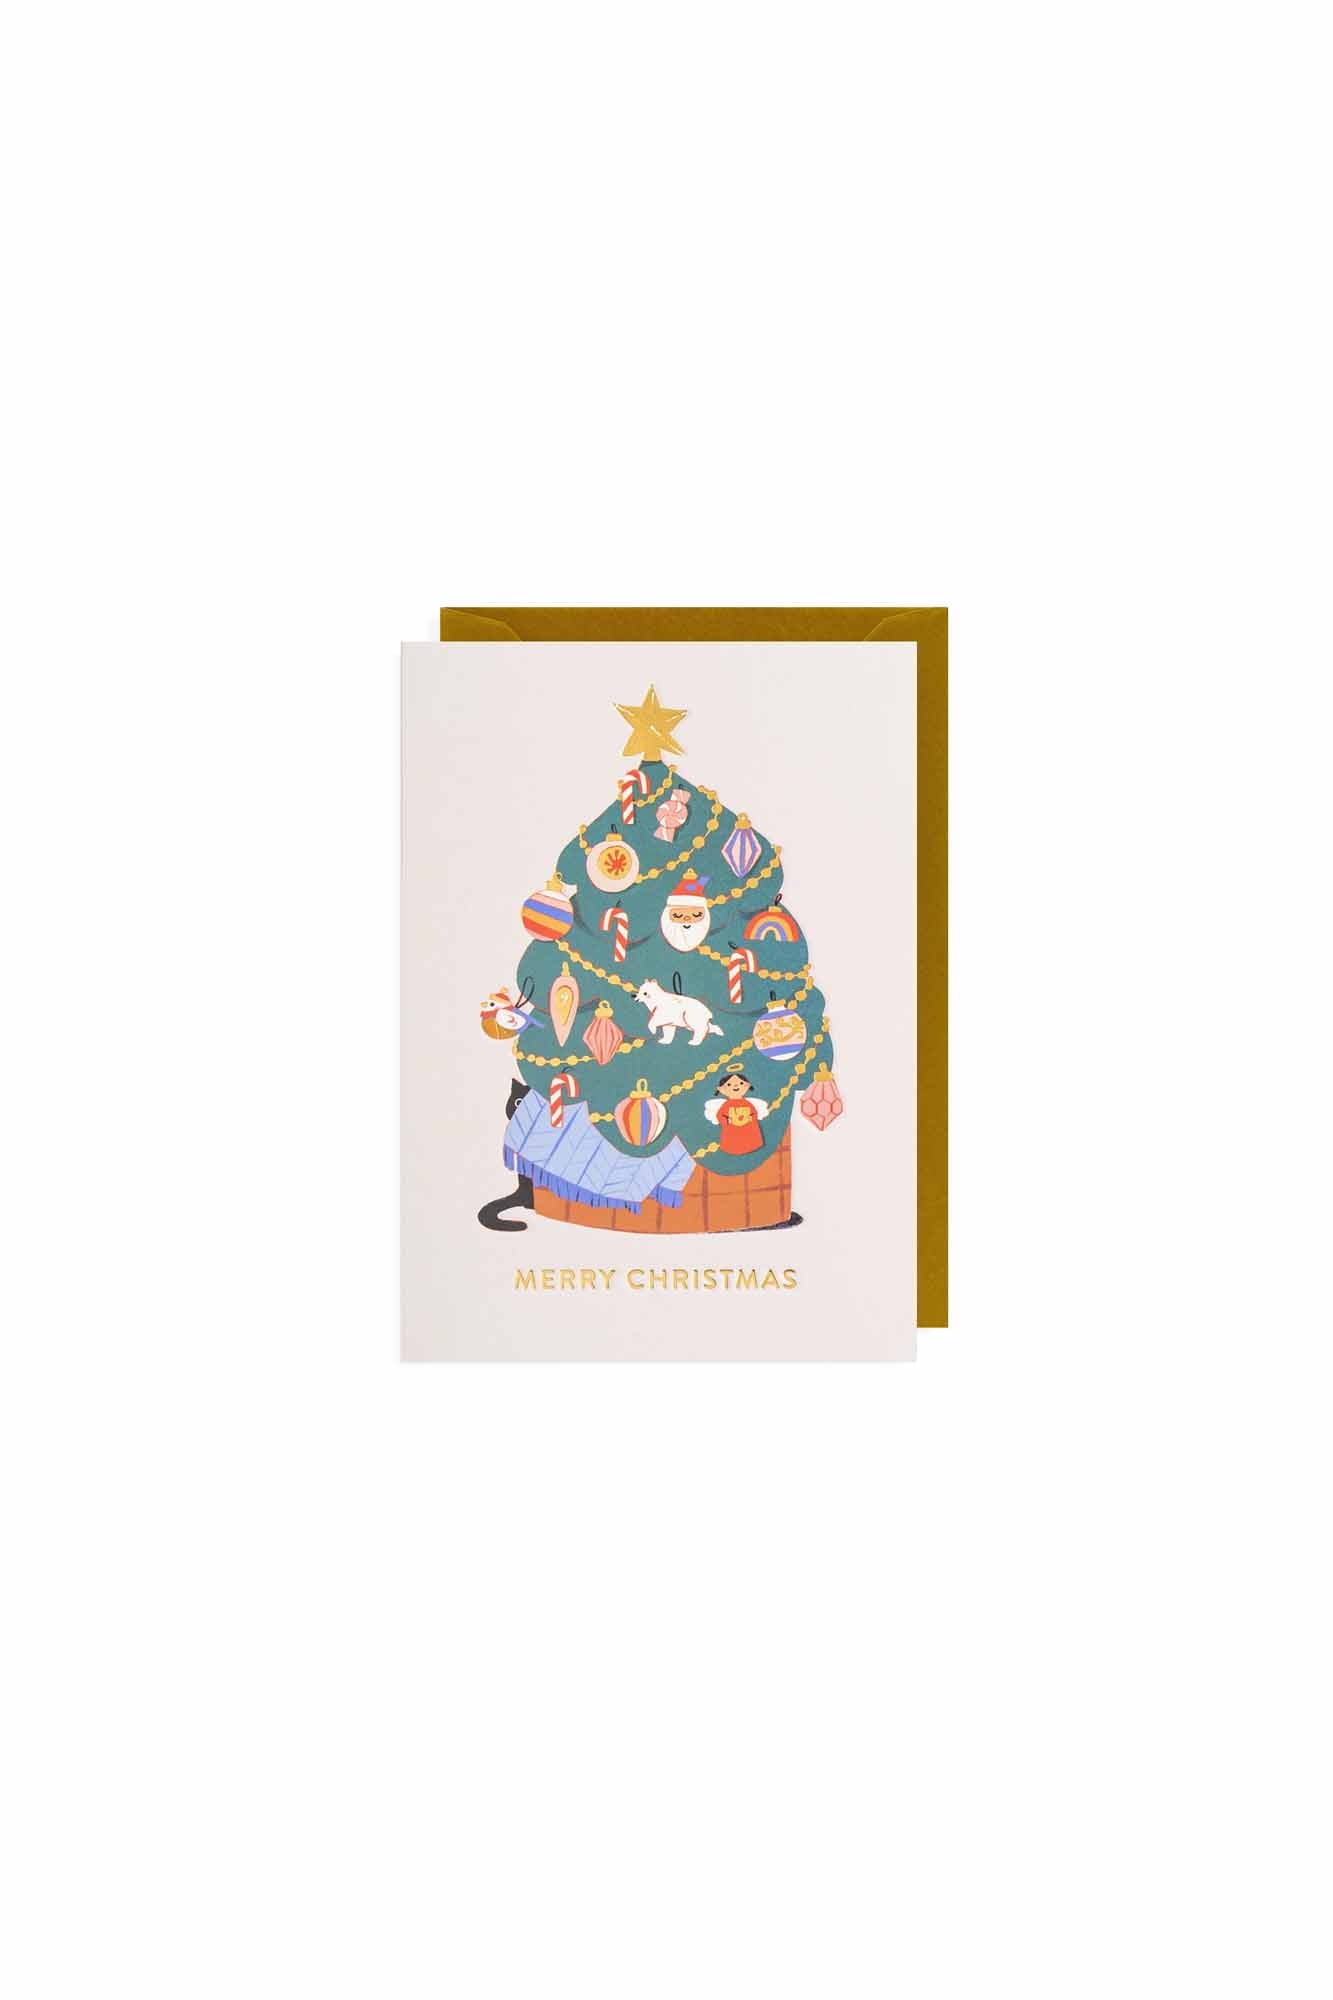 Merry Christmas - Tree Greeting Card